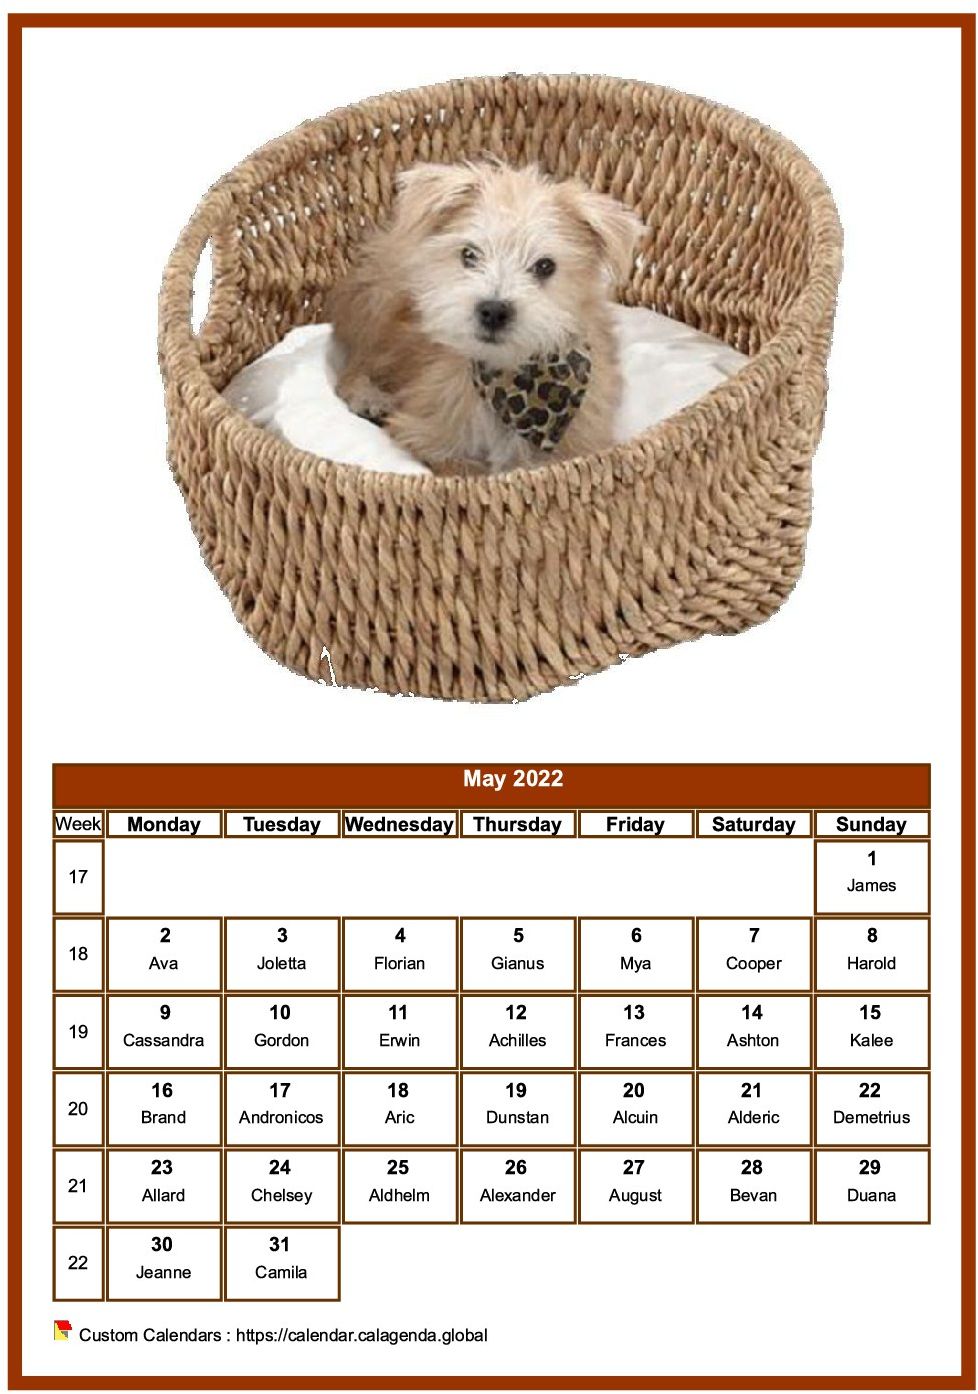 Calendar may 2022 dogs